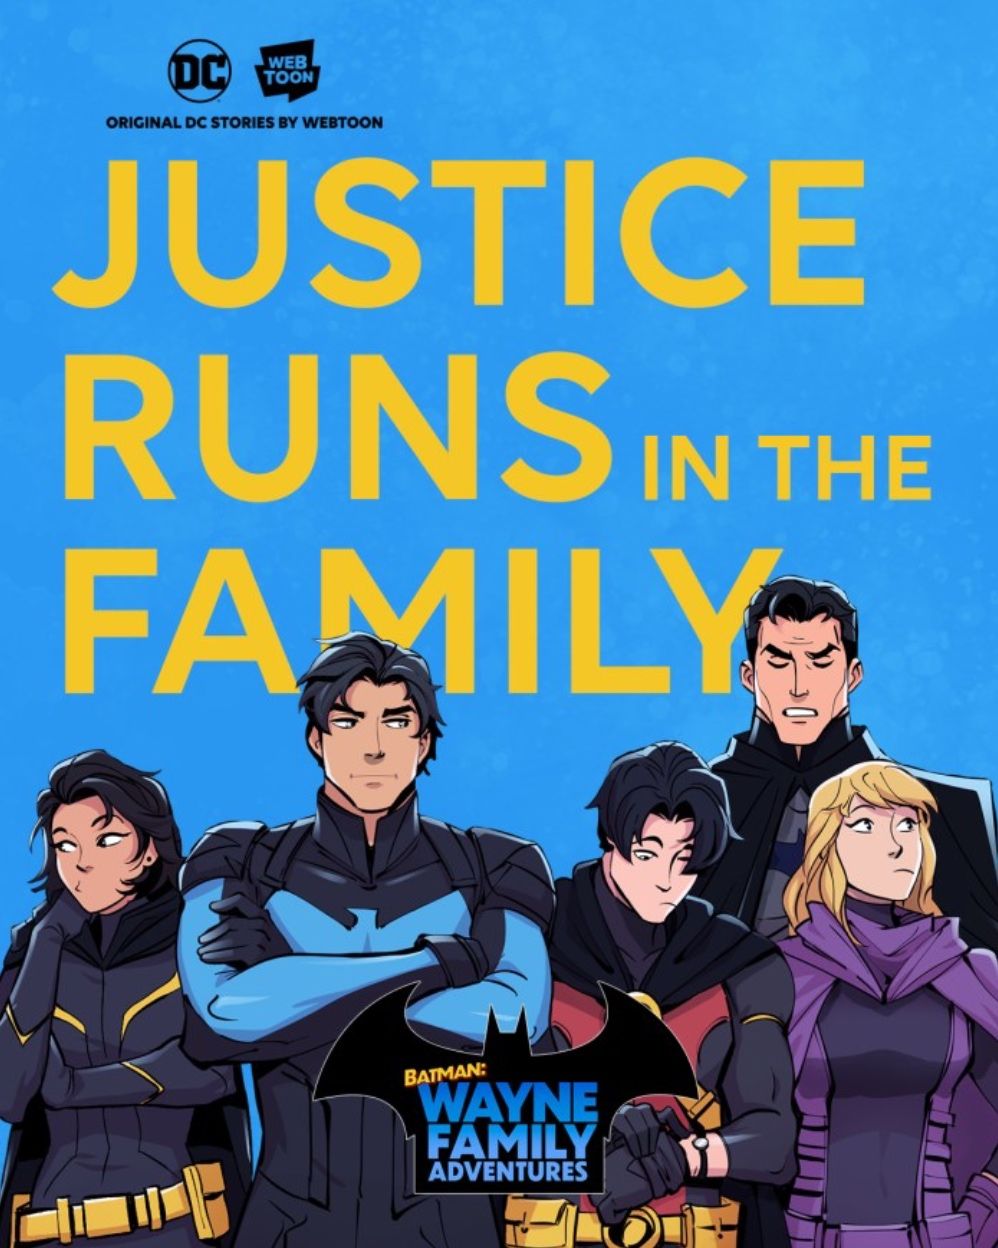 Batman Enters The World of Webtoons With ‘Wayne Family Adventures’